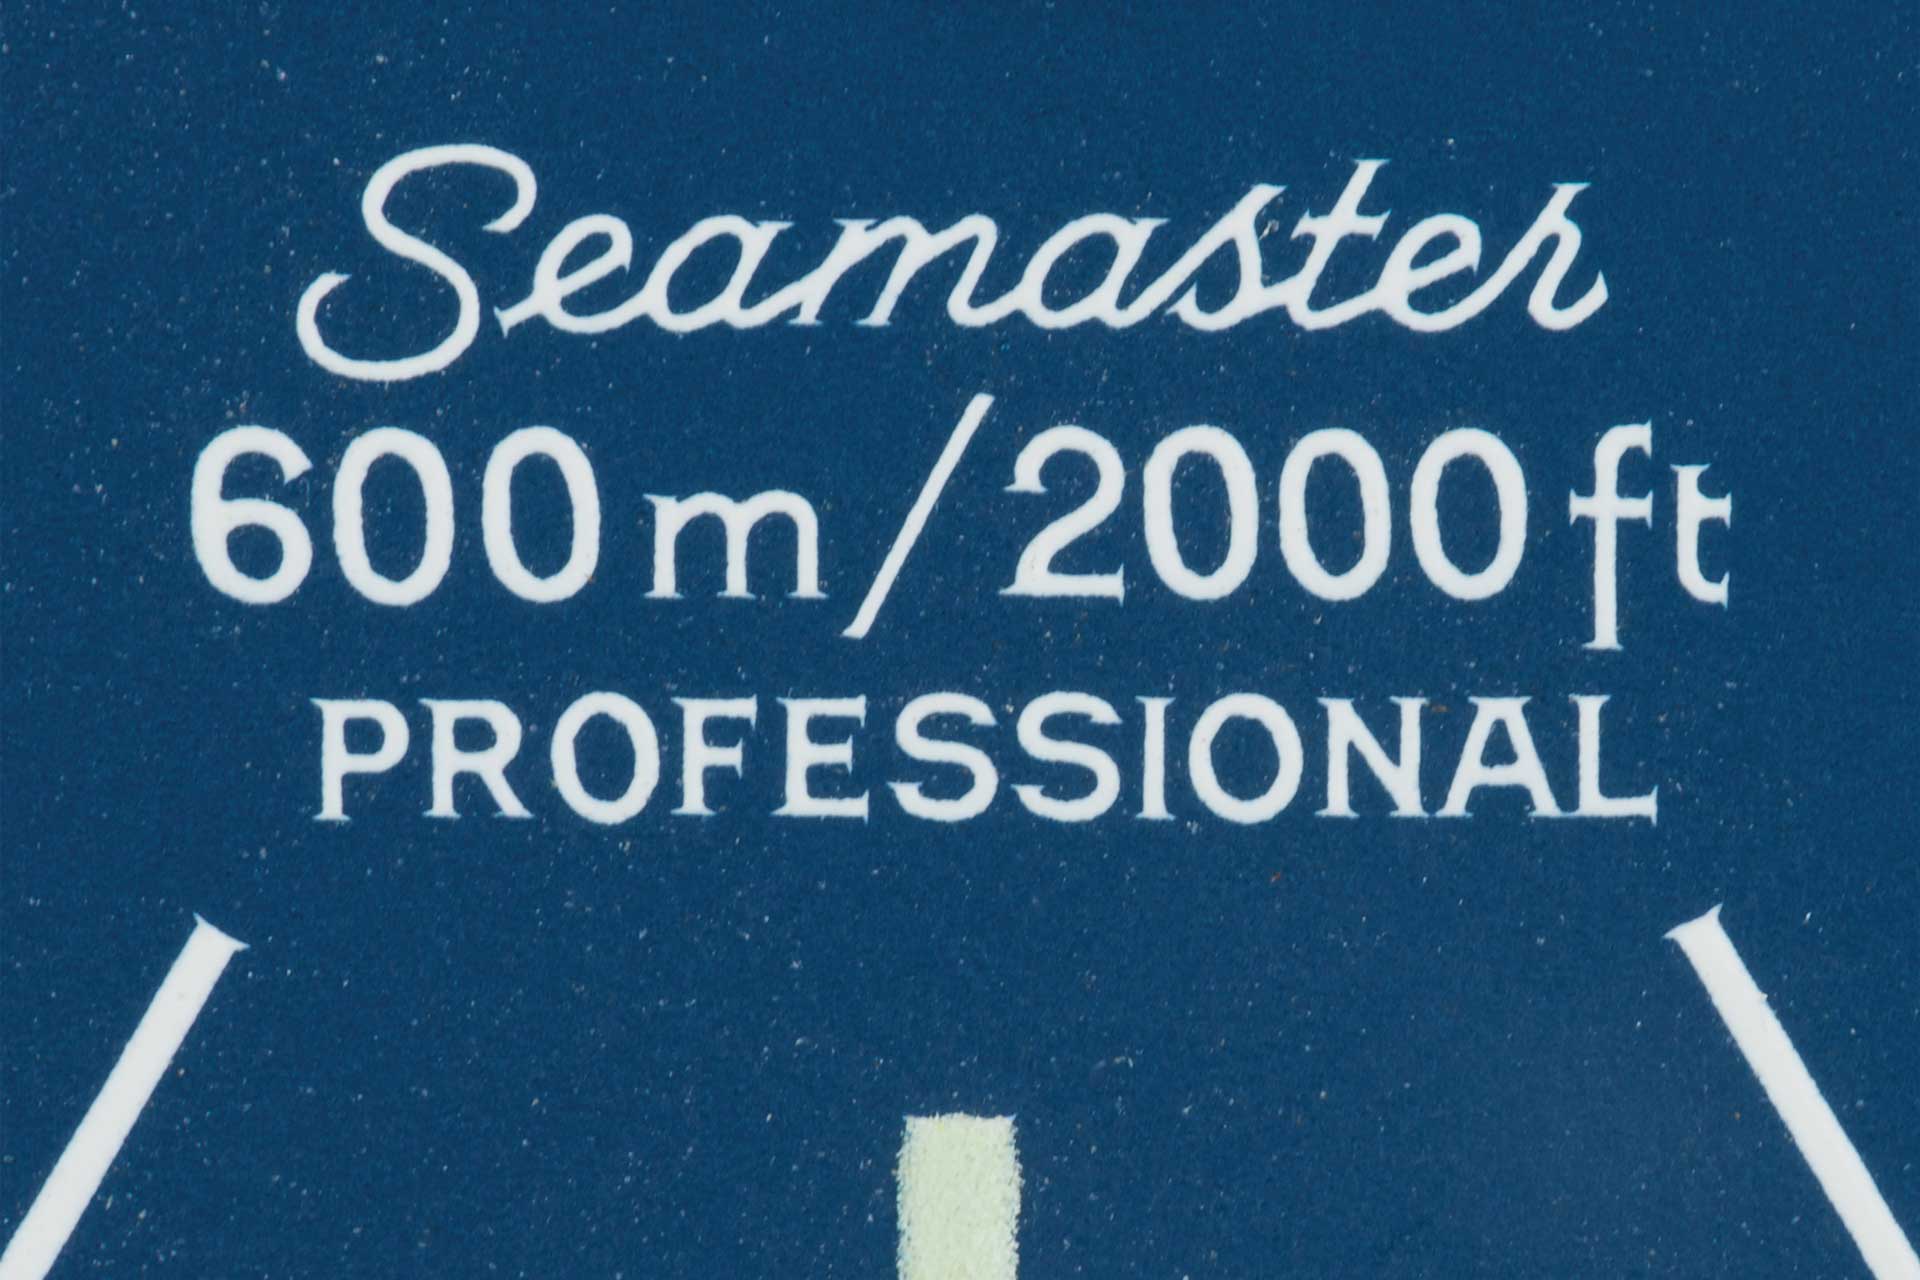 Seamaster 600m/2000ft professional